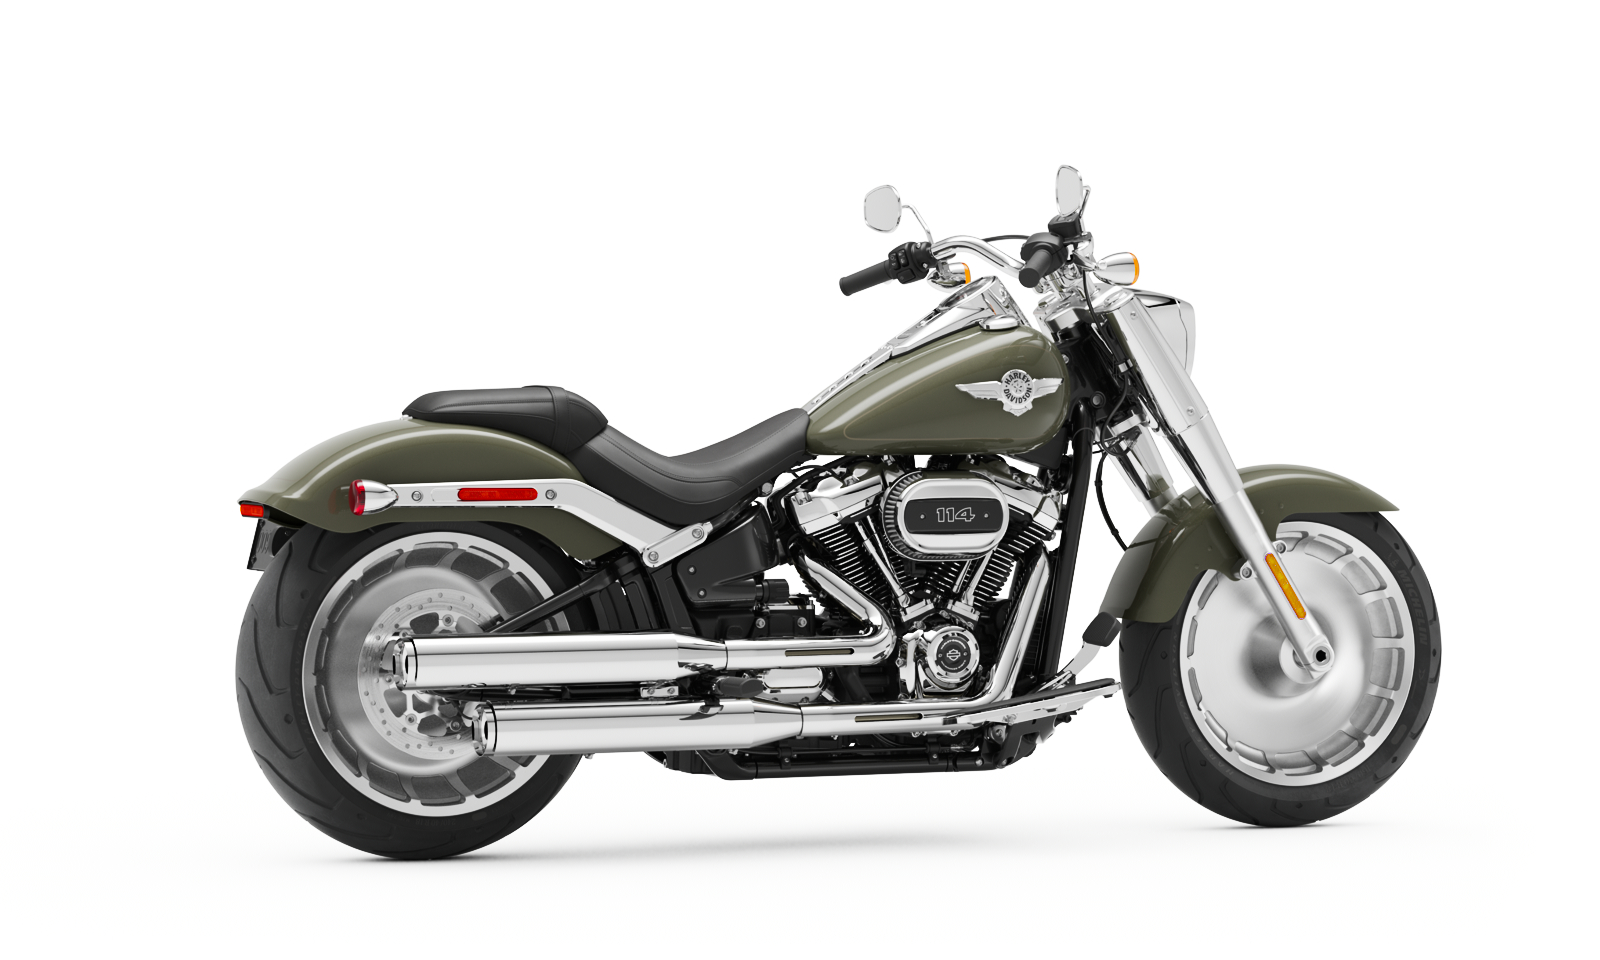 Harley Davidson Fat Bob 2020 Price In India Promotion Off54